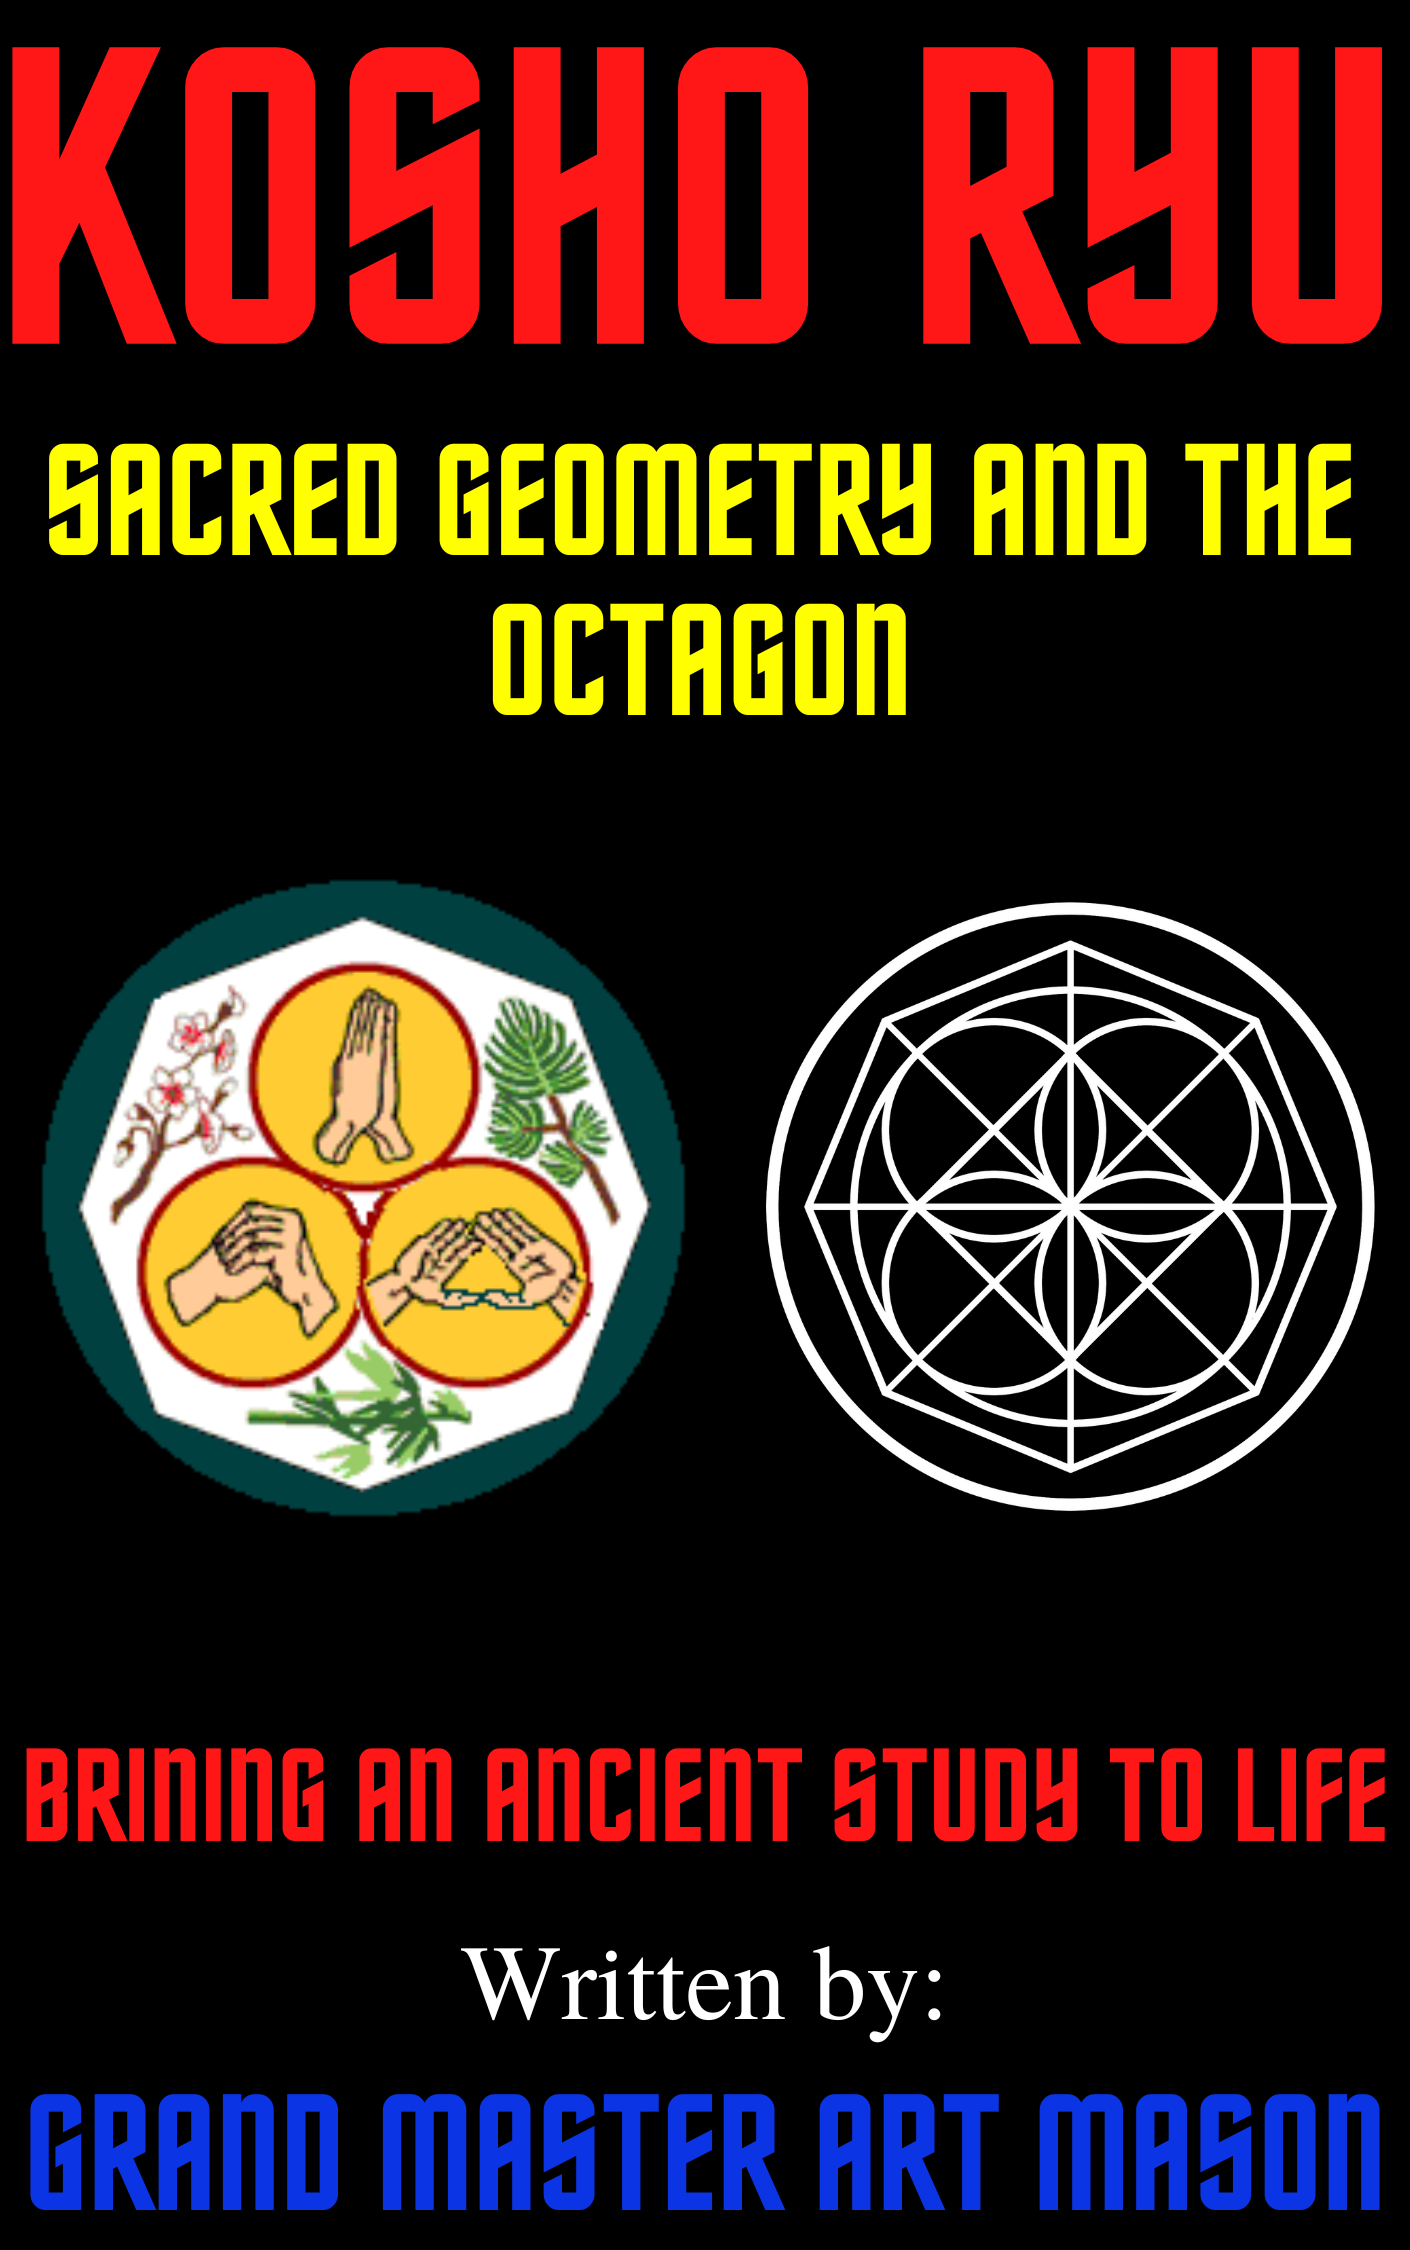 * Kosho Ryu: Sacred Geometry and the Octagon